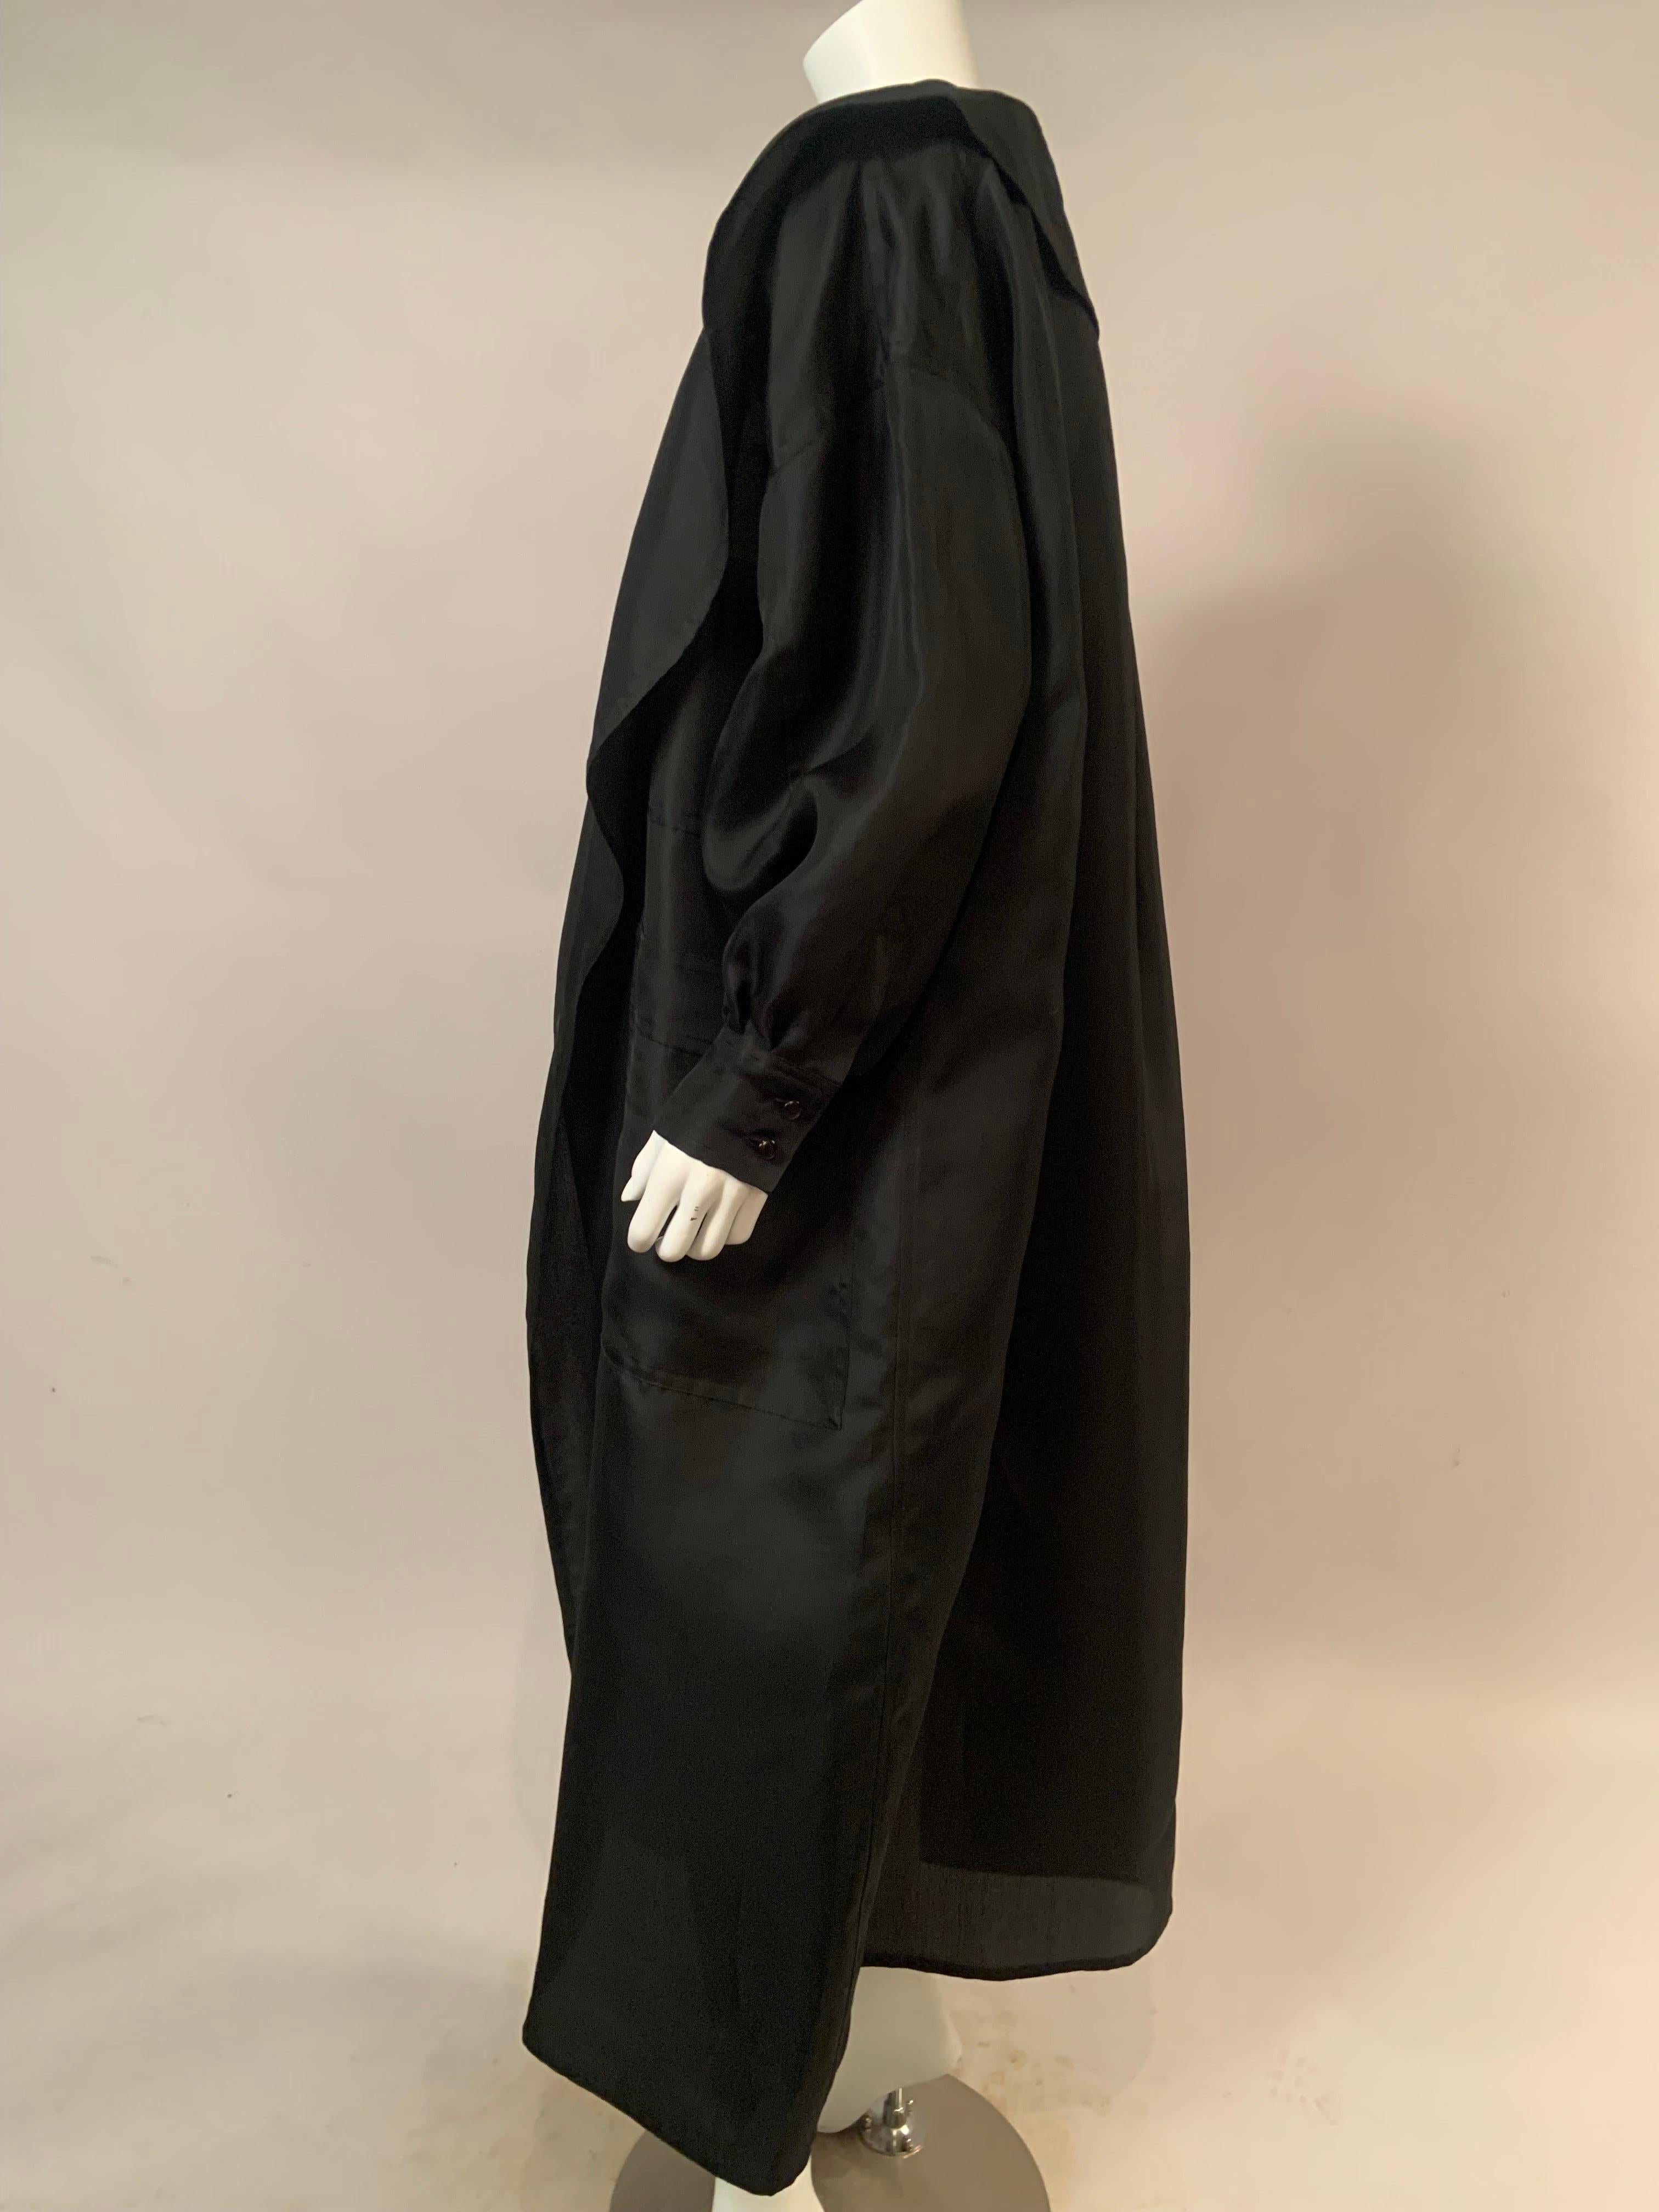 Women's Salvatore Ferragamo Sheer Black Silk Duster Coat, New With Tags